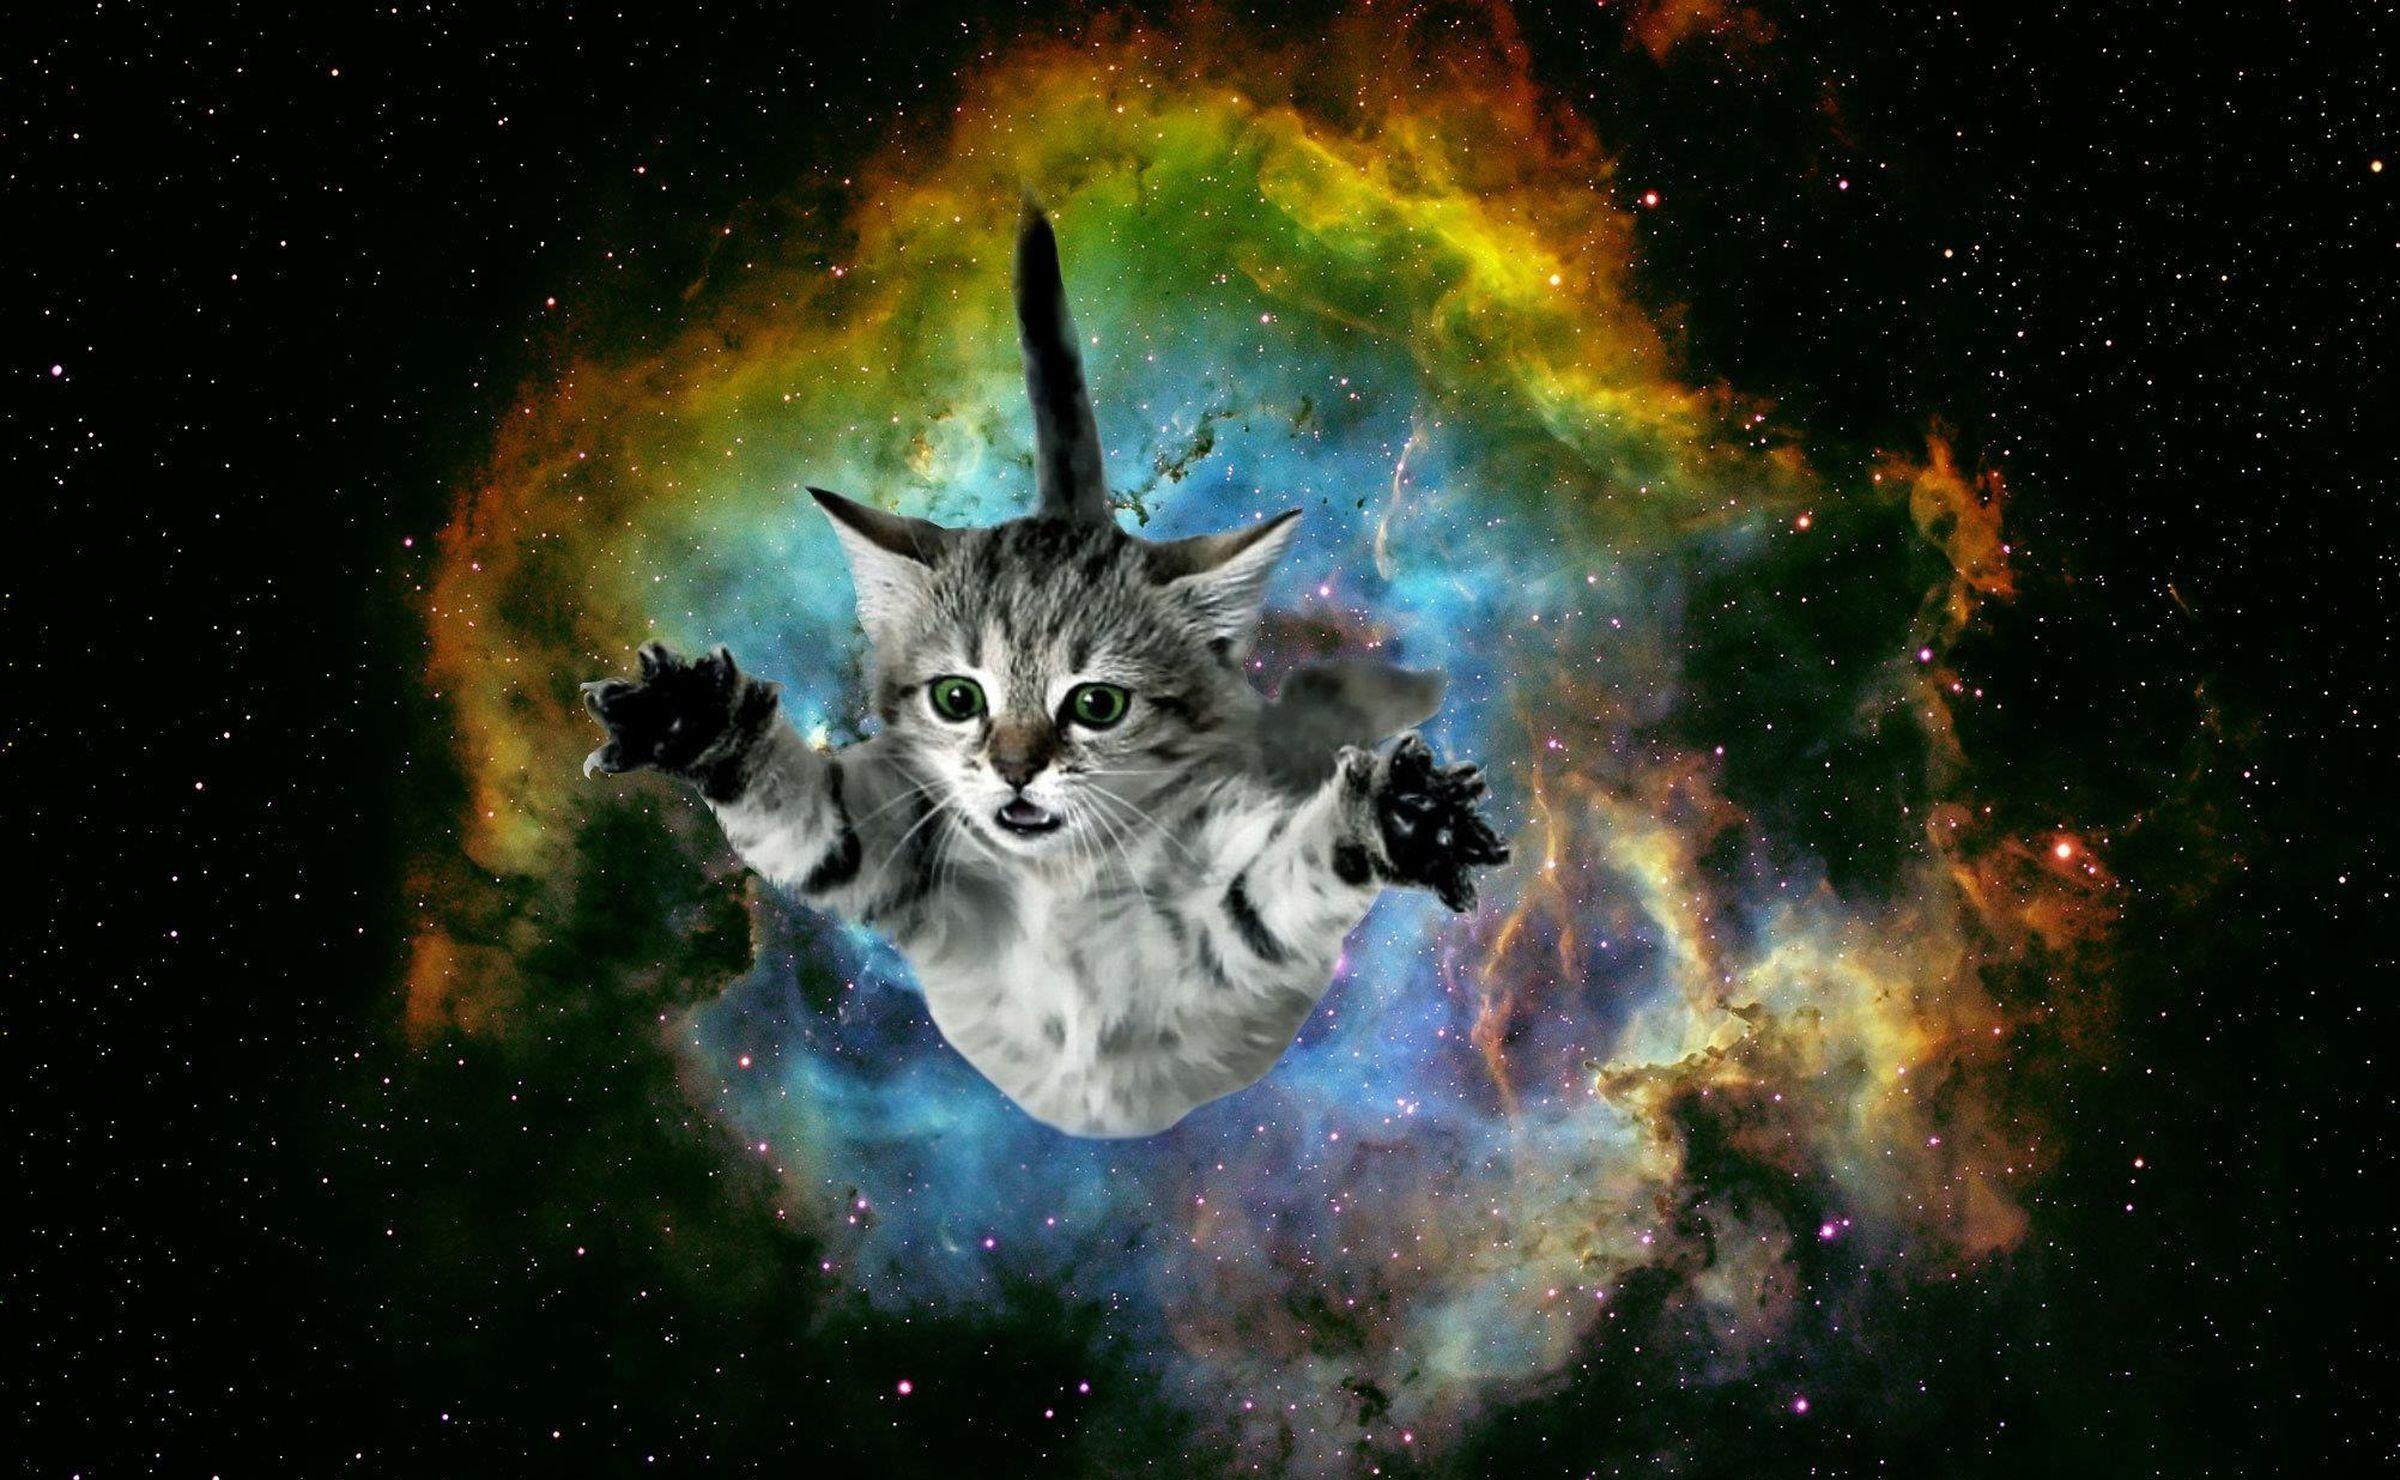 Galaxy Cat Live Wallpaper  free download